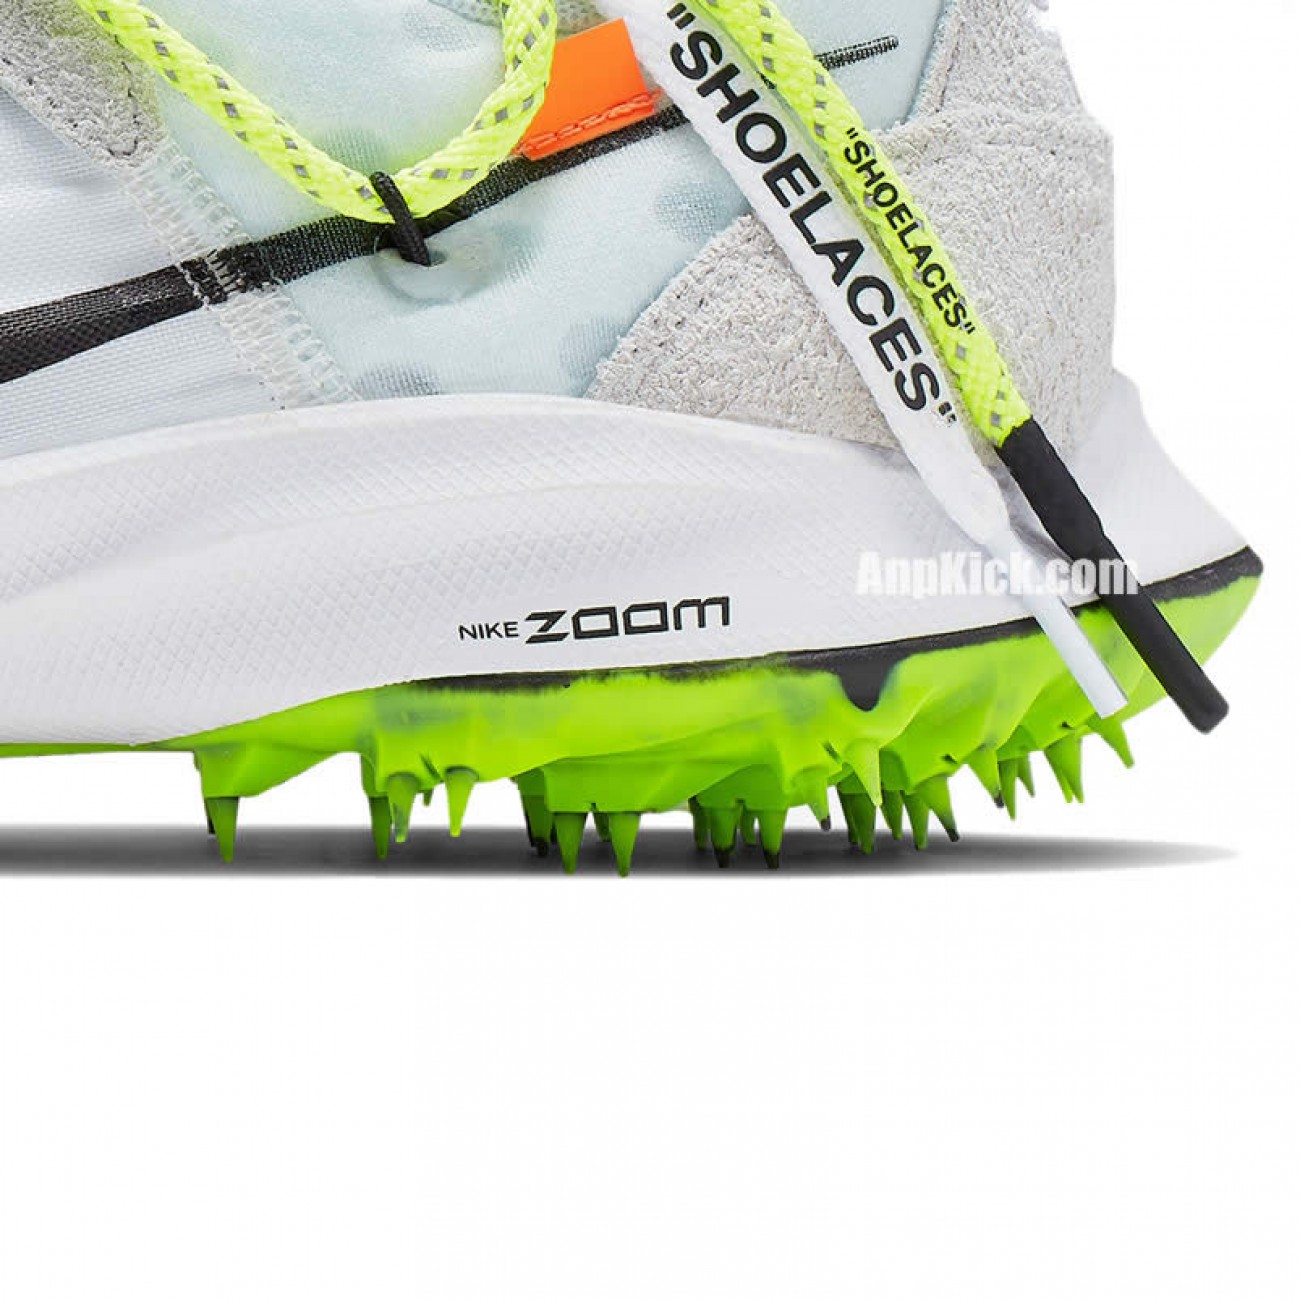 Off-White x Nike Zoom Terra Kiger 5 White "Athlete In Progress" CD8179-100